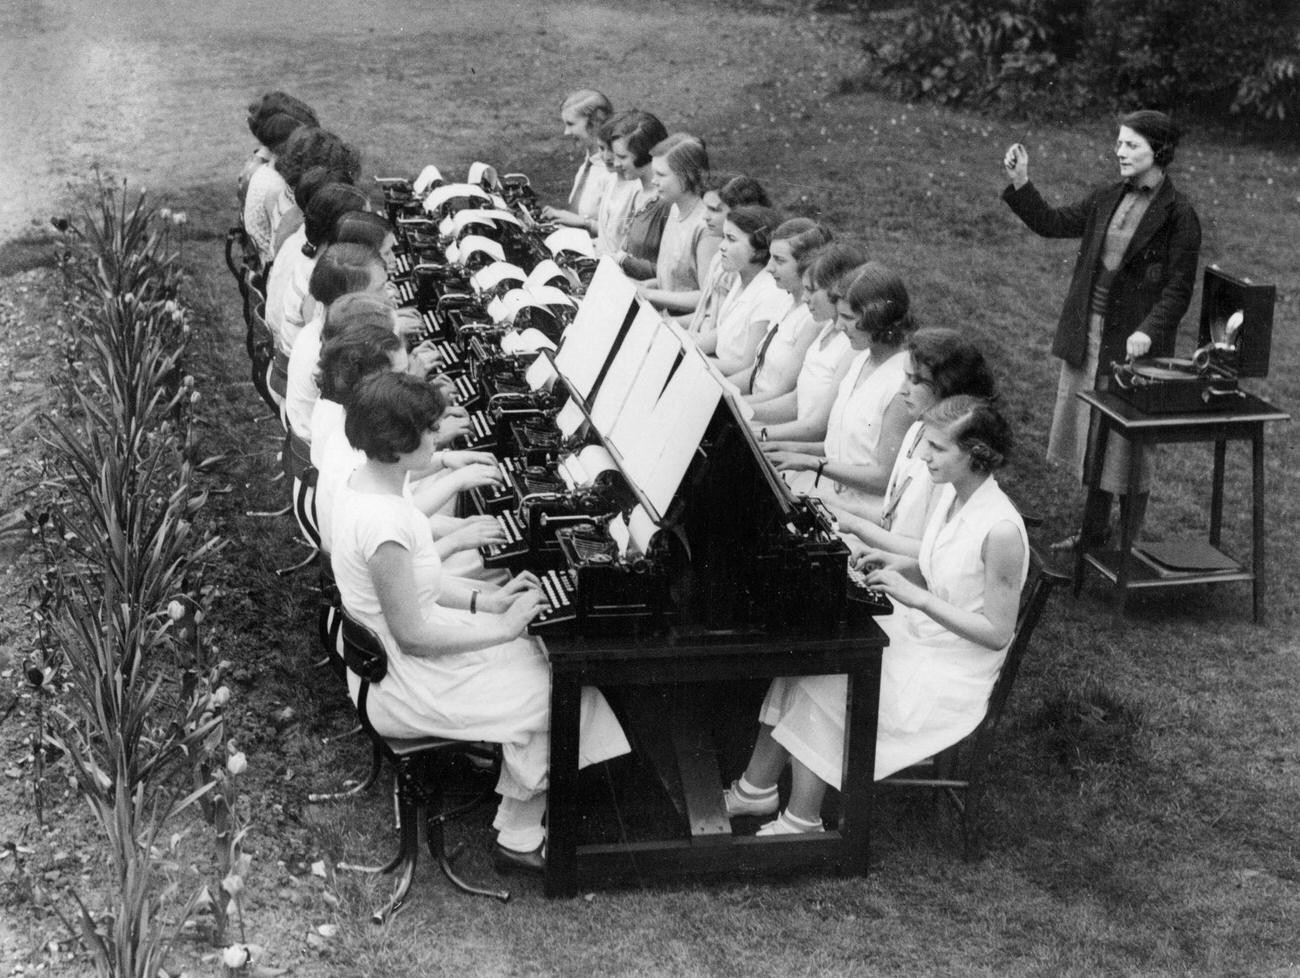 Outdoor typewriting class for secretaries, 1932.